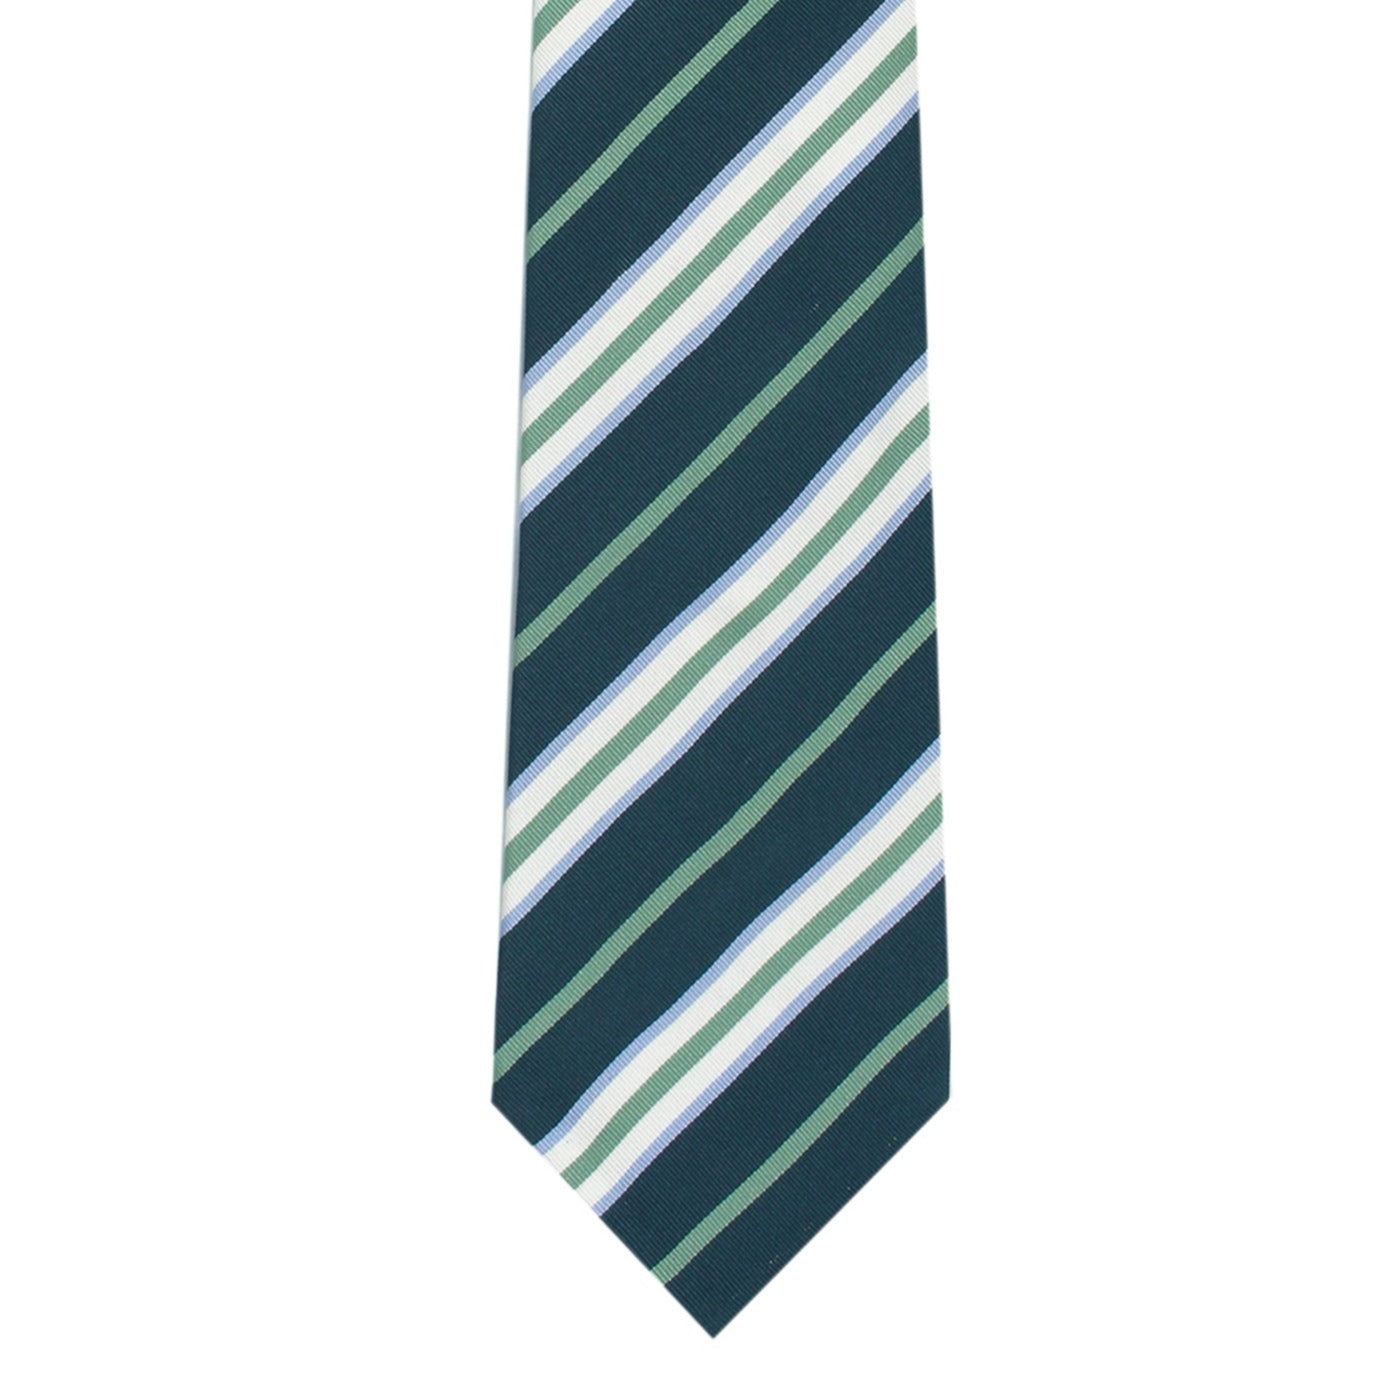 Chiaia Silk and Cotton tie